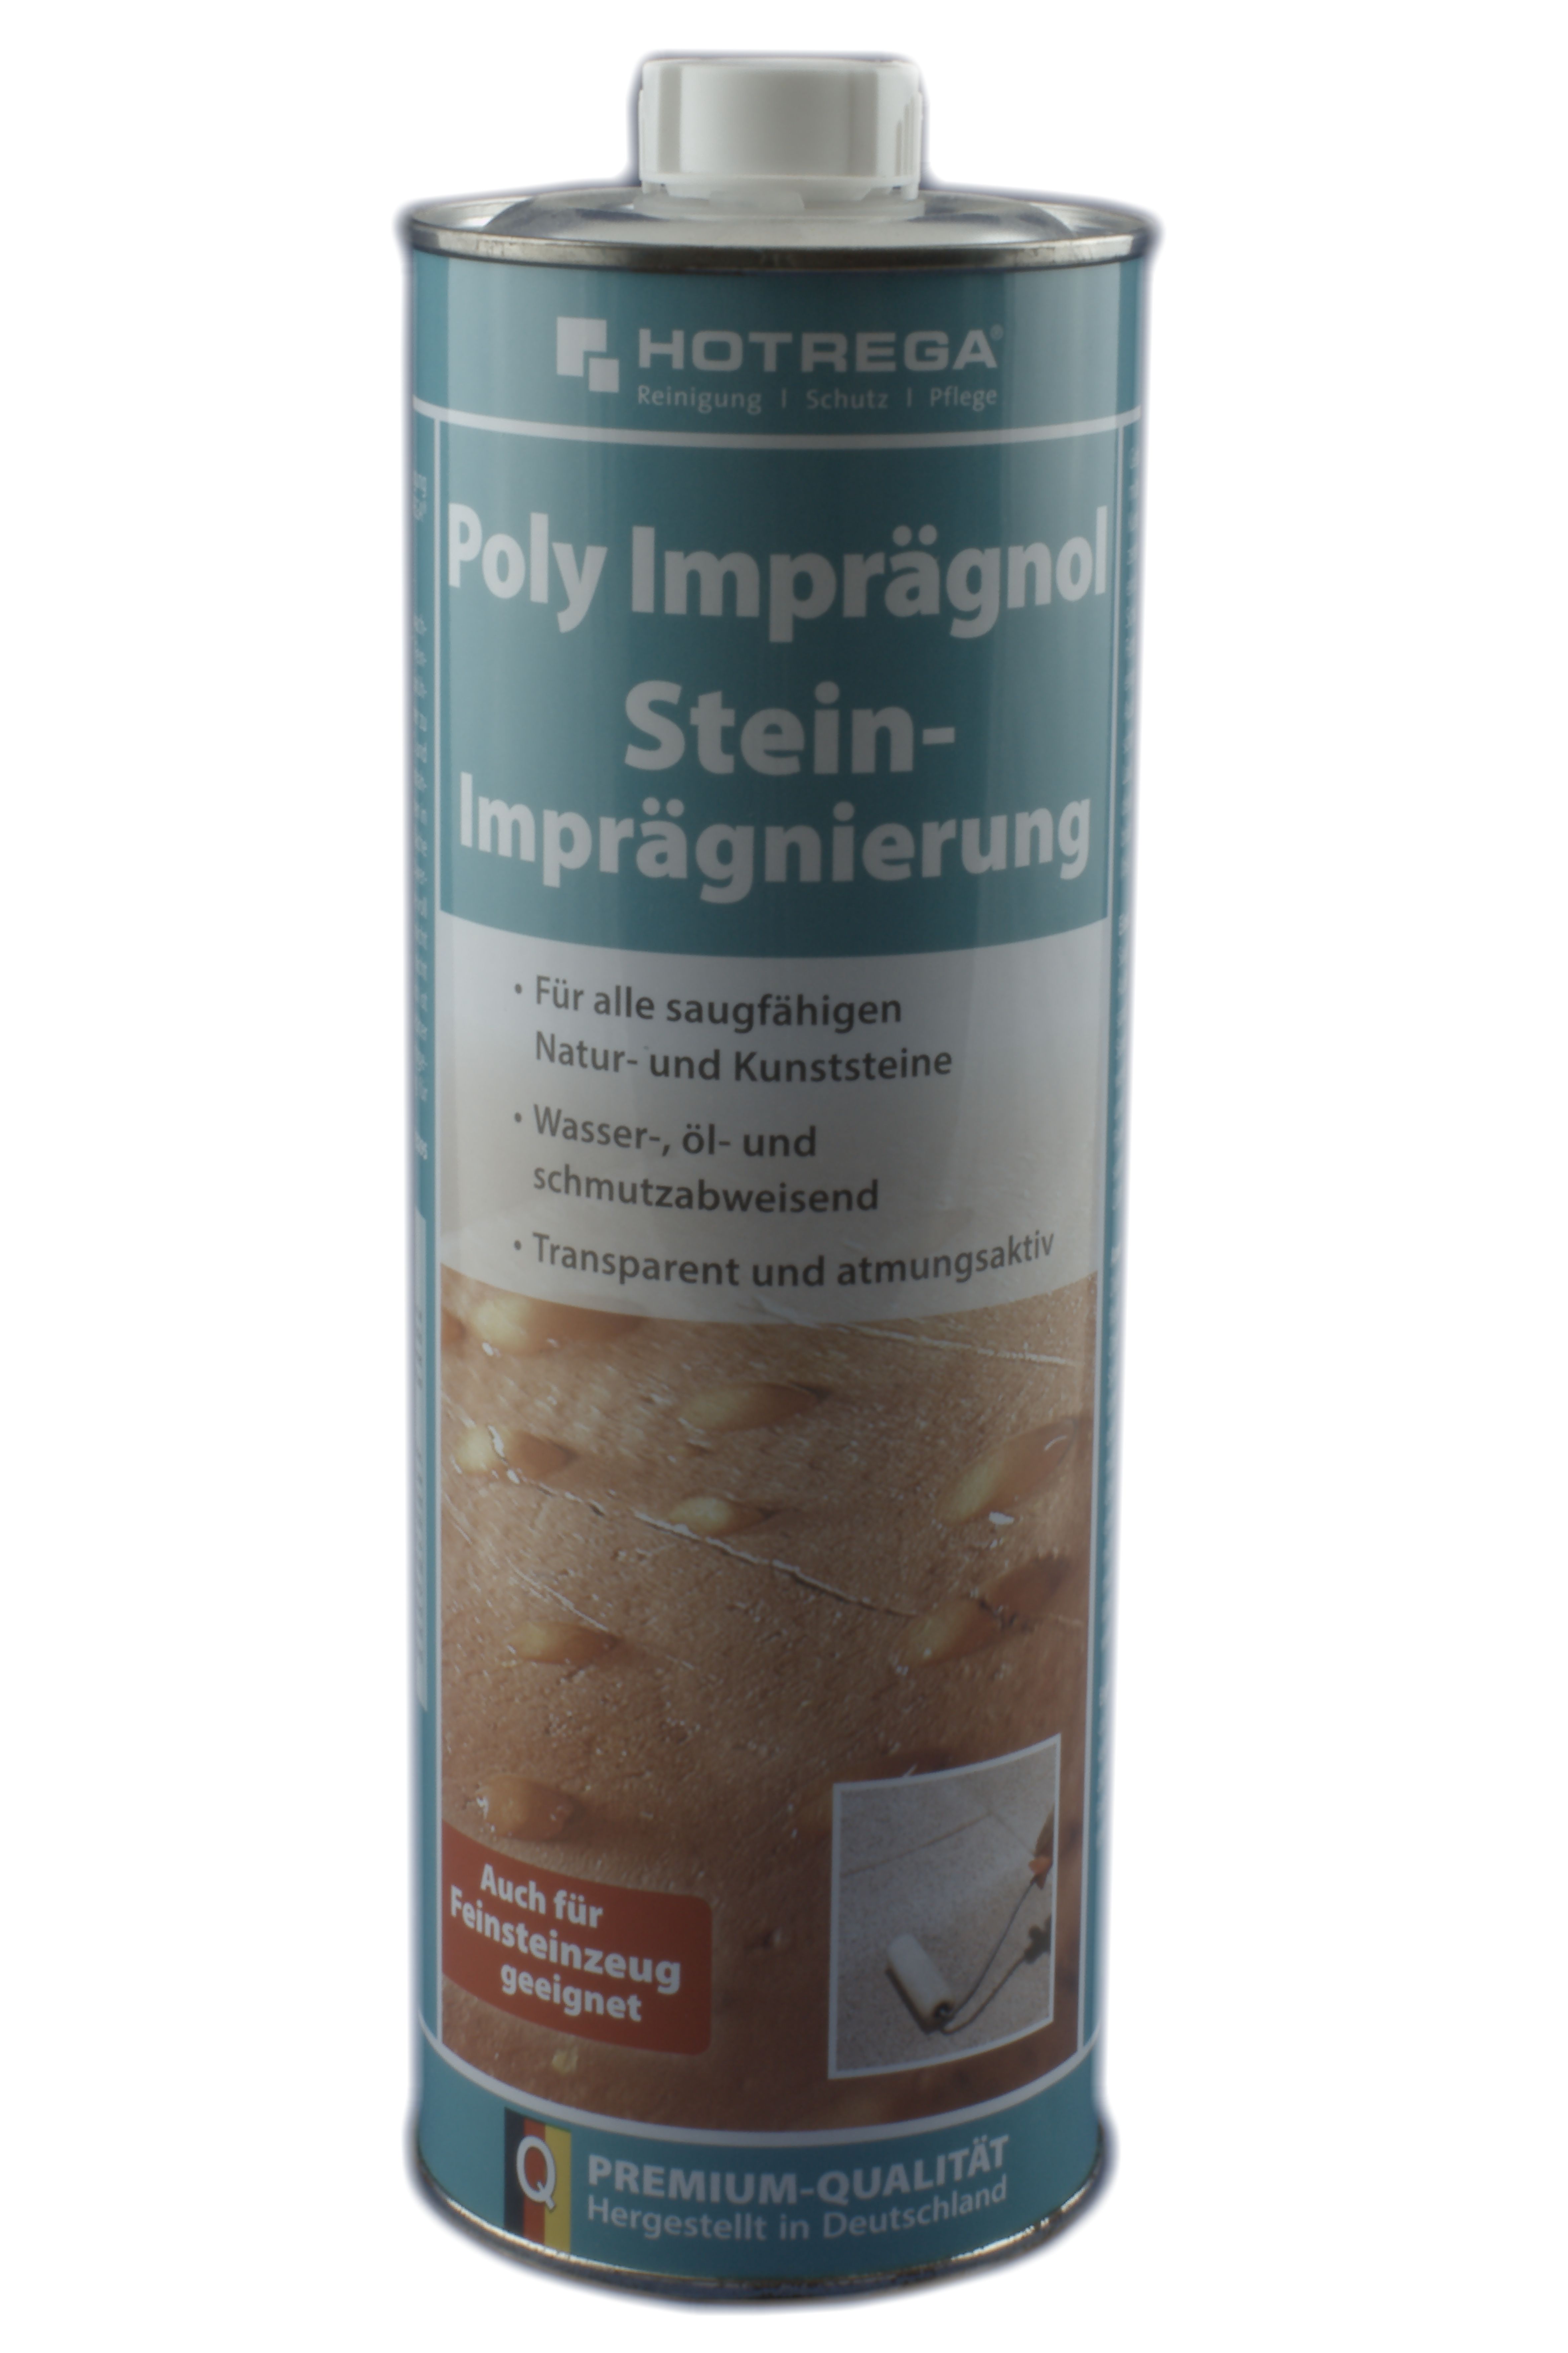 Hotrega Poly-Imprägnol Stein-Imprägnierung  1 ltr.